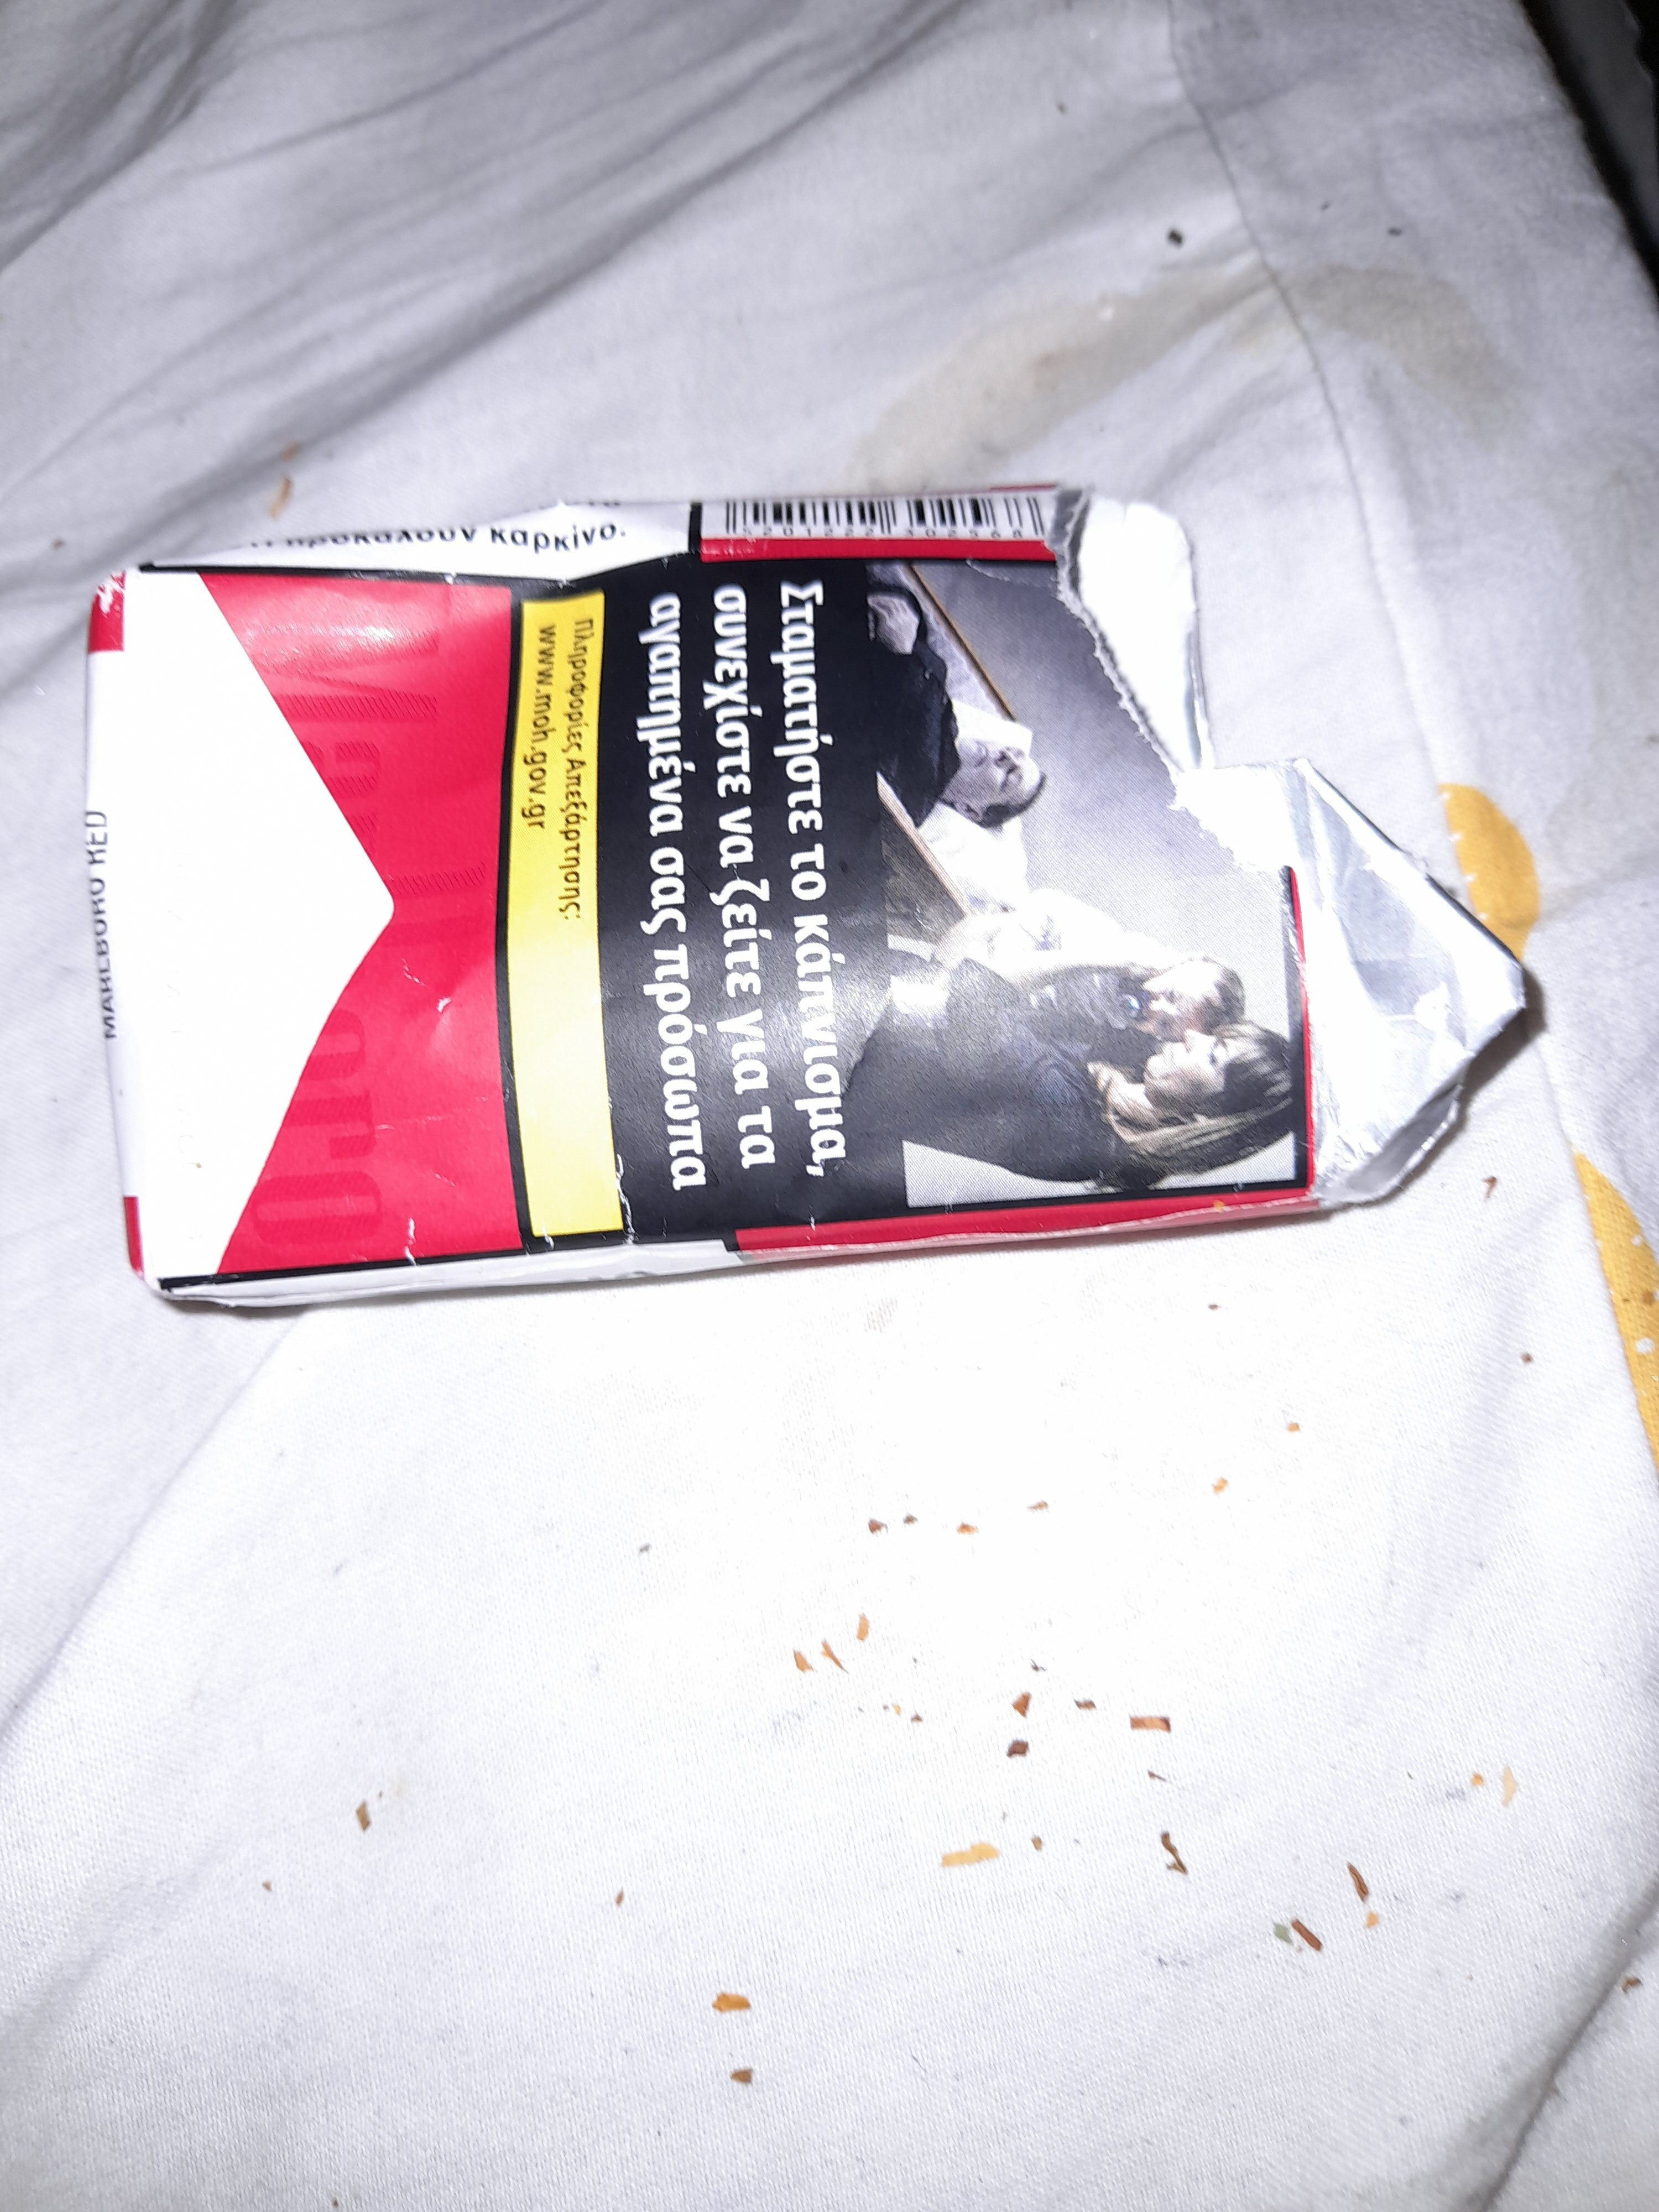 cigarette - Product - fr